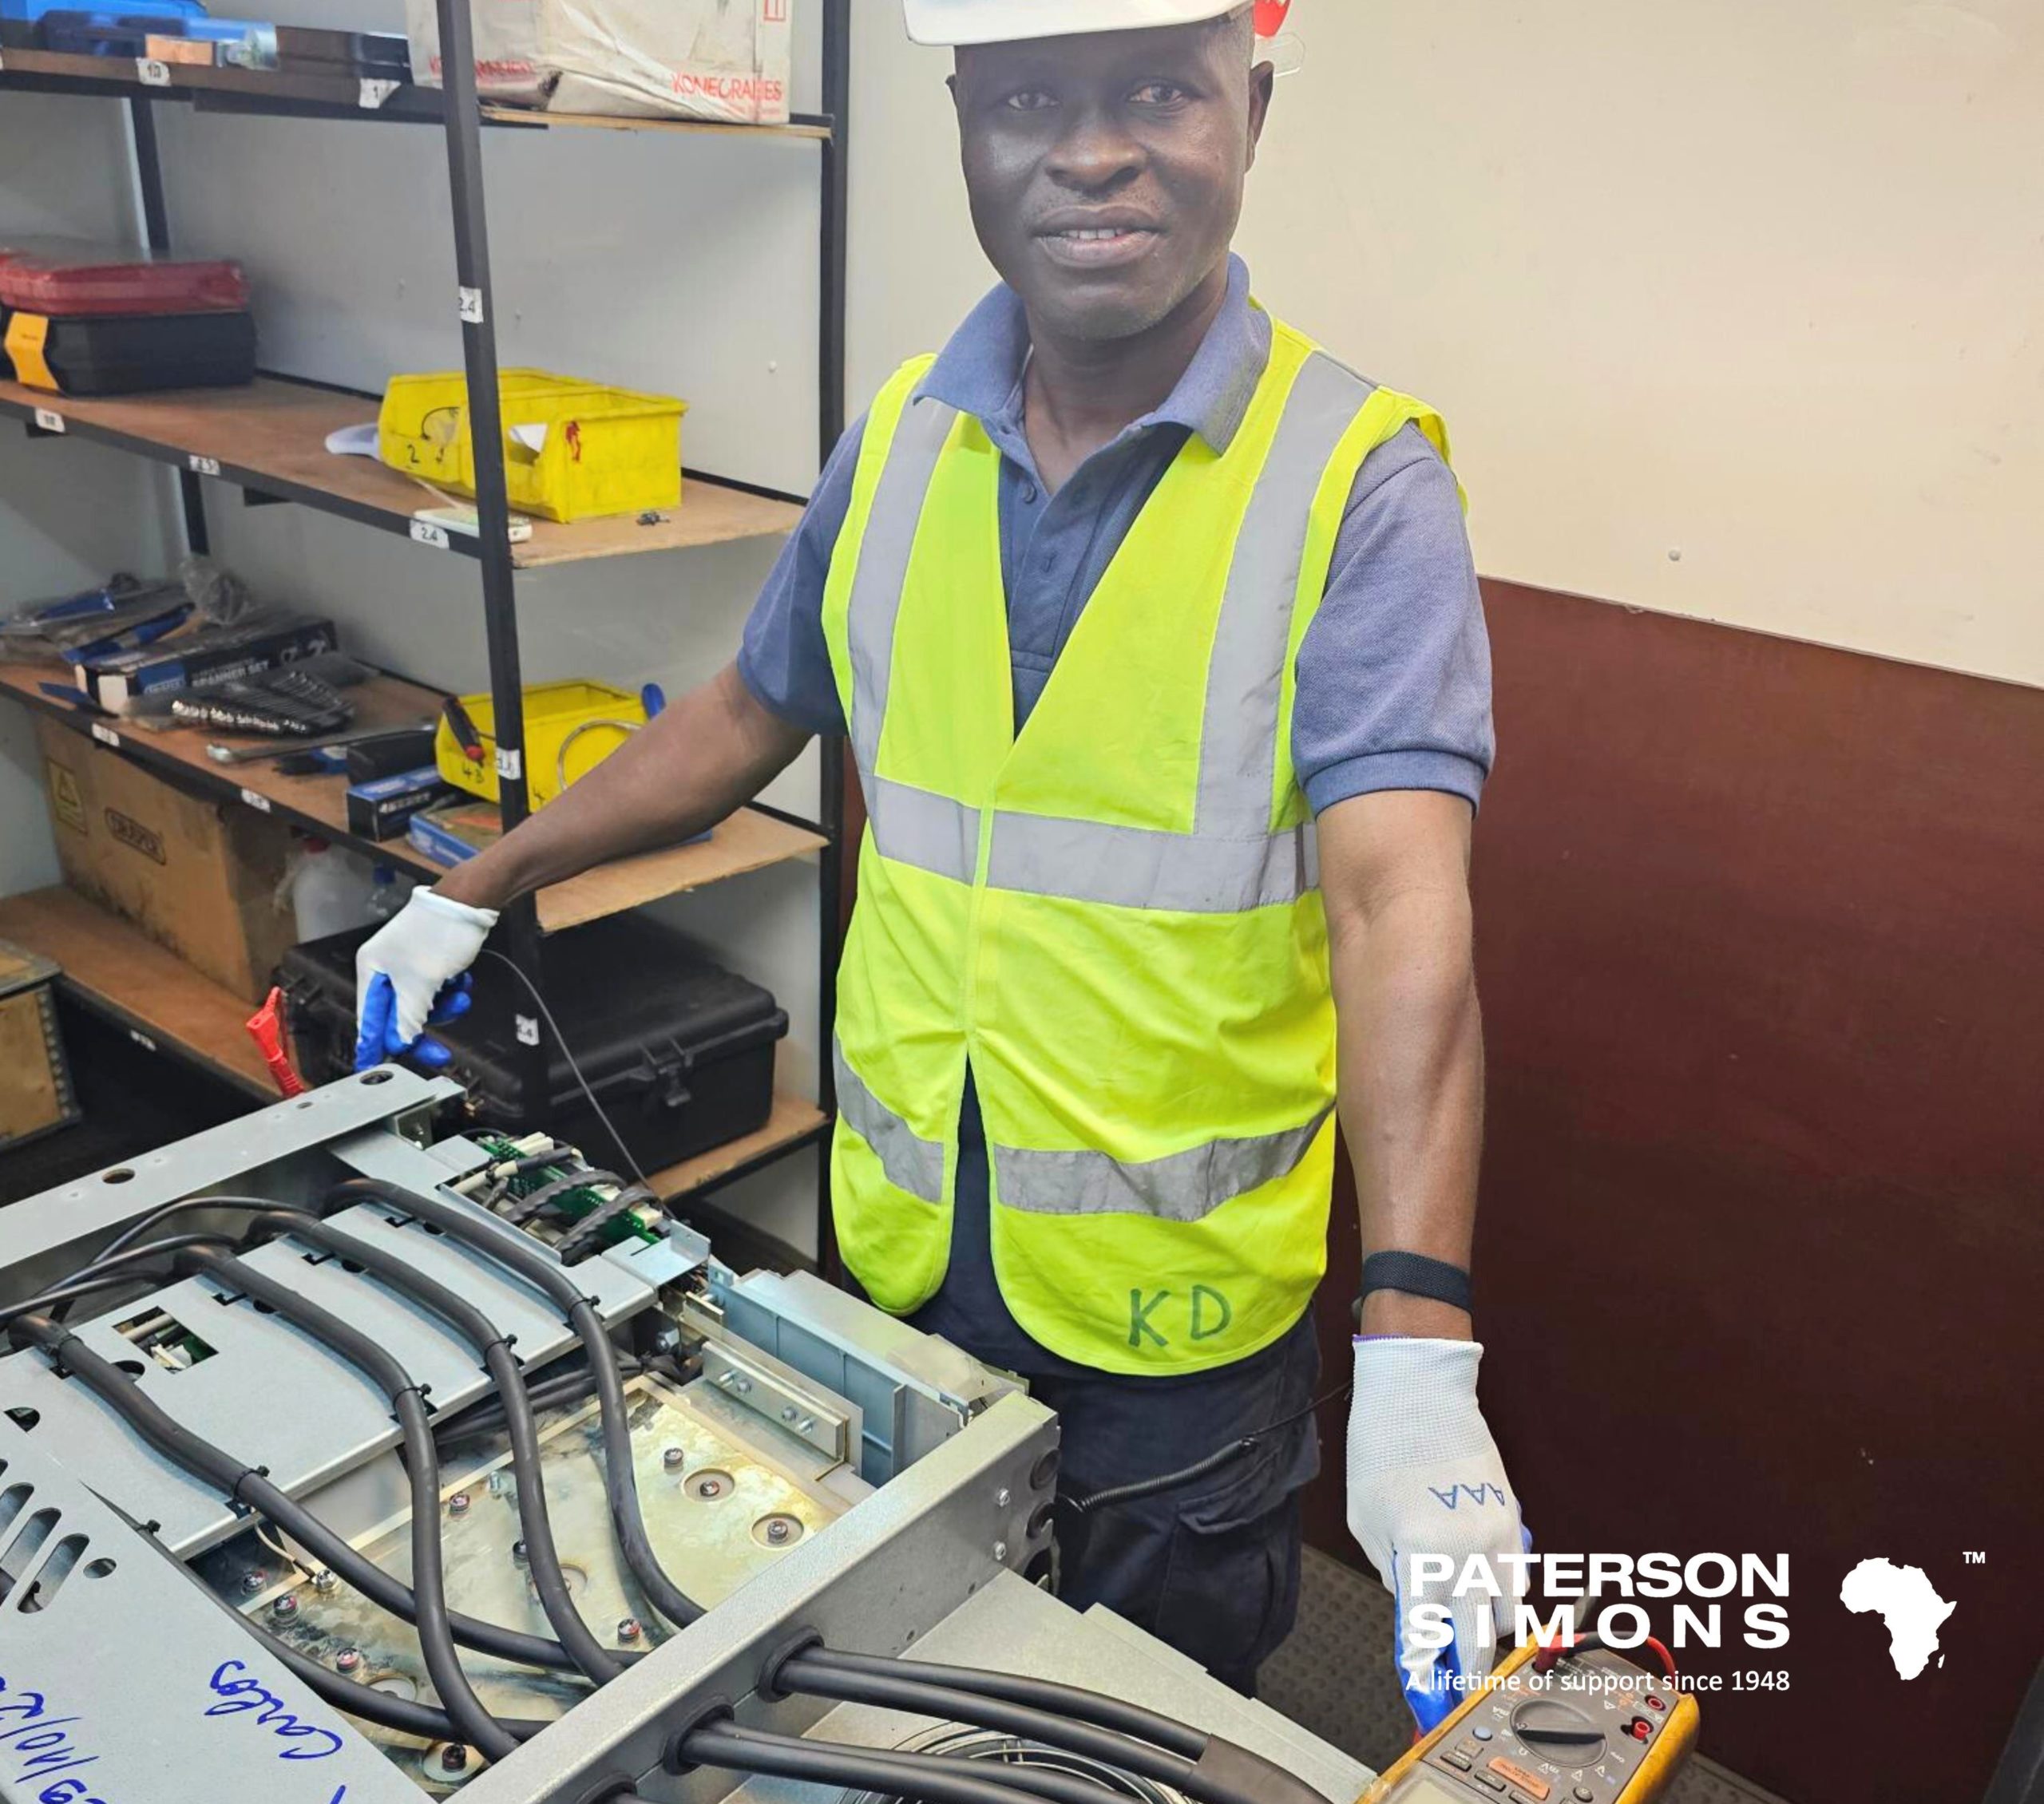 THE PEOPLE OF PATERSON SIMONS: MEET EMMANUEL EVUIBI – SENIOR SERVICE ENGINEER AT PATERSON SIMONS NIGERIA!